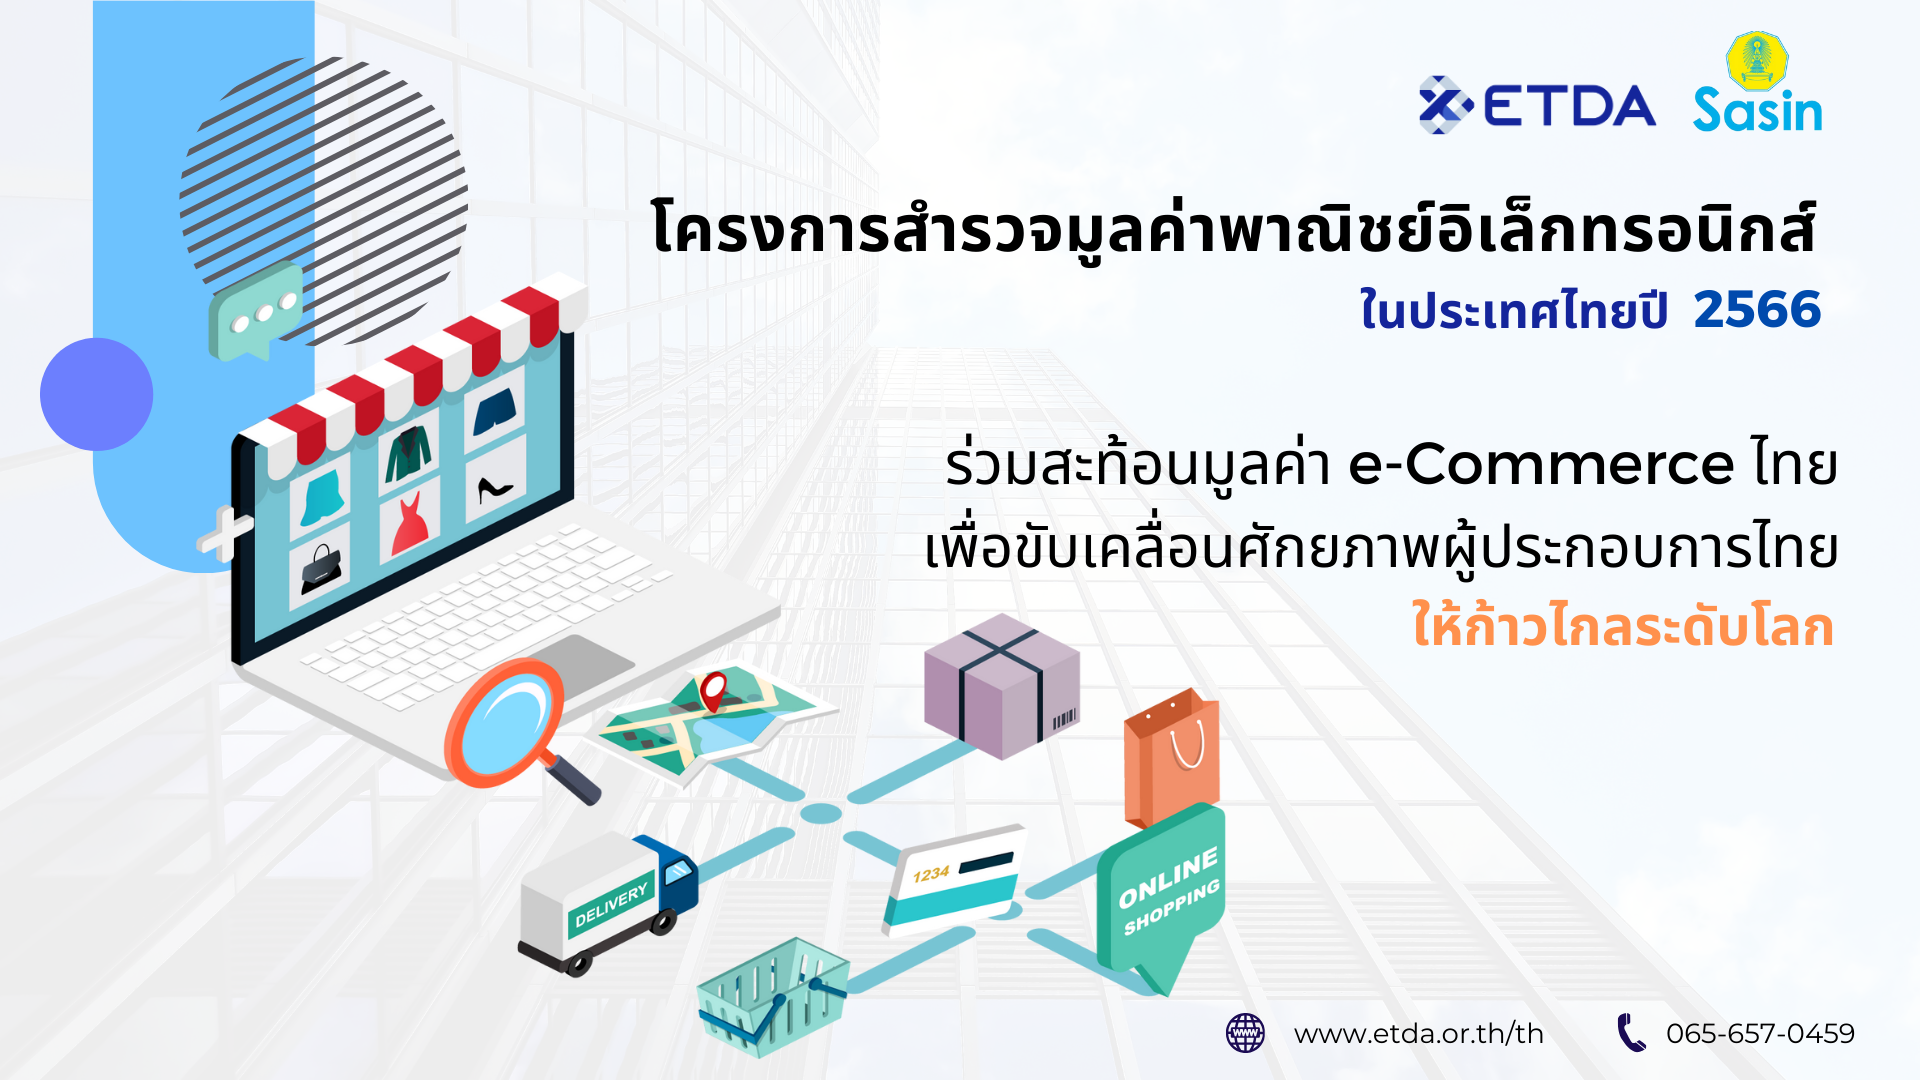 ETDA ขอเชิญชวนผู้ประกอบการ e-Commerce ทุกท่าน ร่วมตอบแบบสำรวจมูลค่าพาณิชย์อิเล็กทรอนิกส์ในประเทศไทย ปี 2566 ตั้งแต่วันนี้ ถึง 6 ธันวาคม 2566